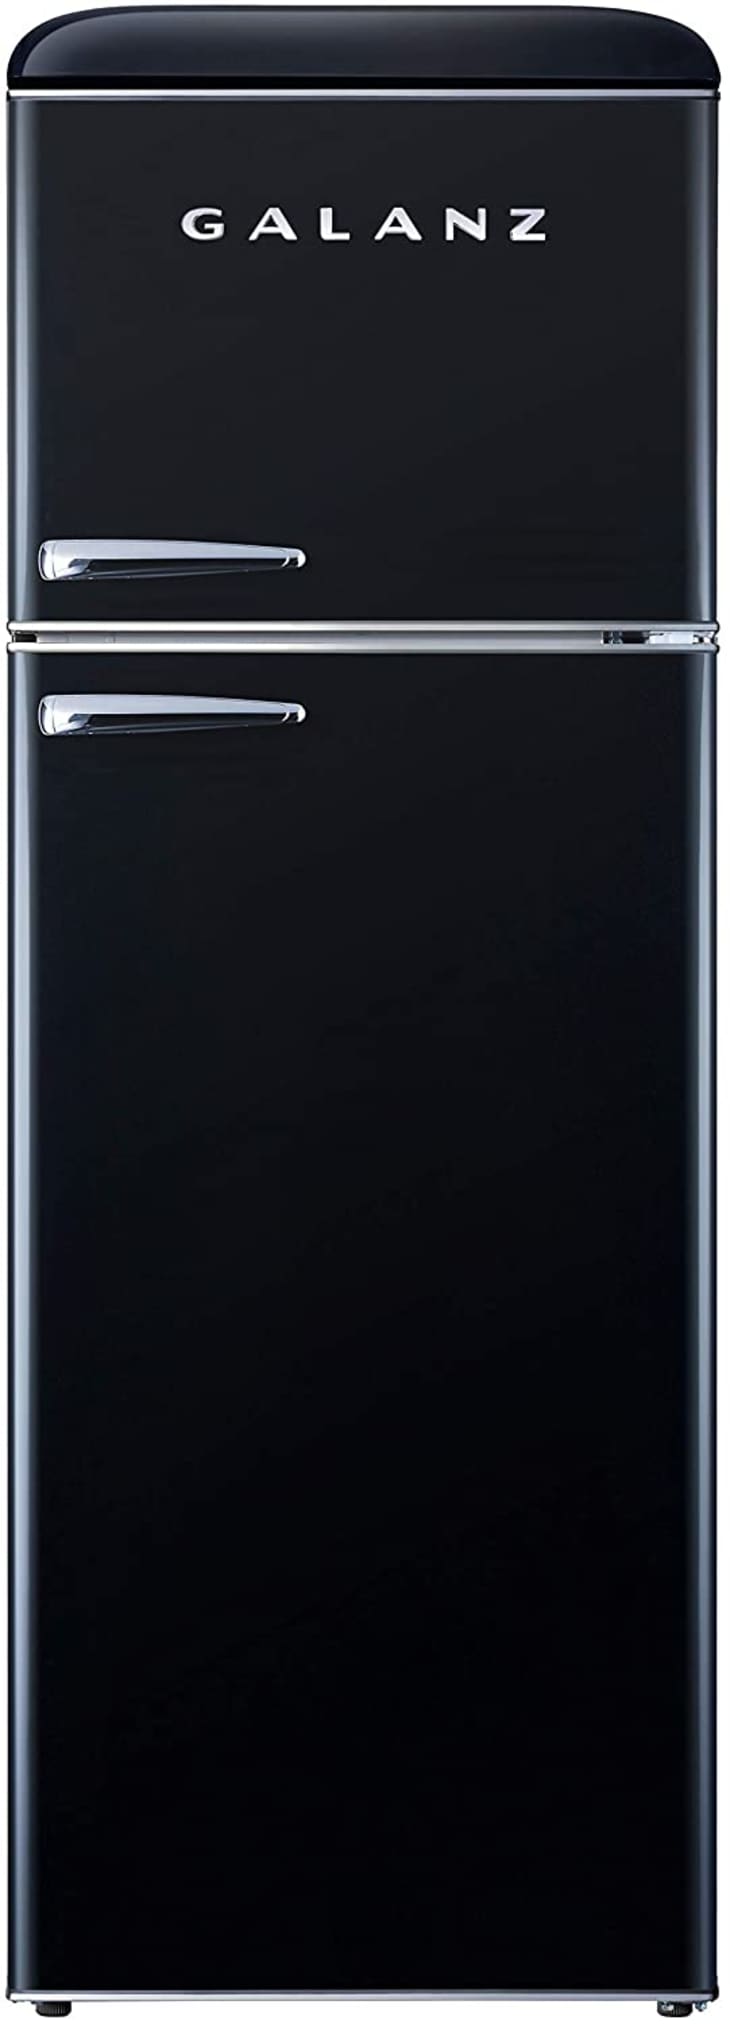 Galanz Retro Black Refrigerator at Amazon